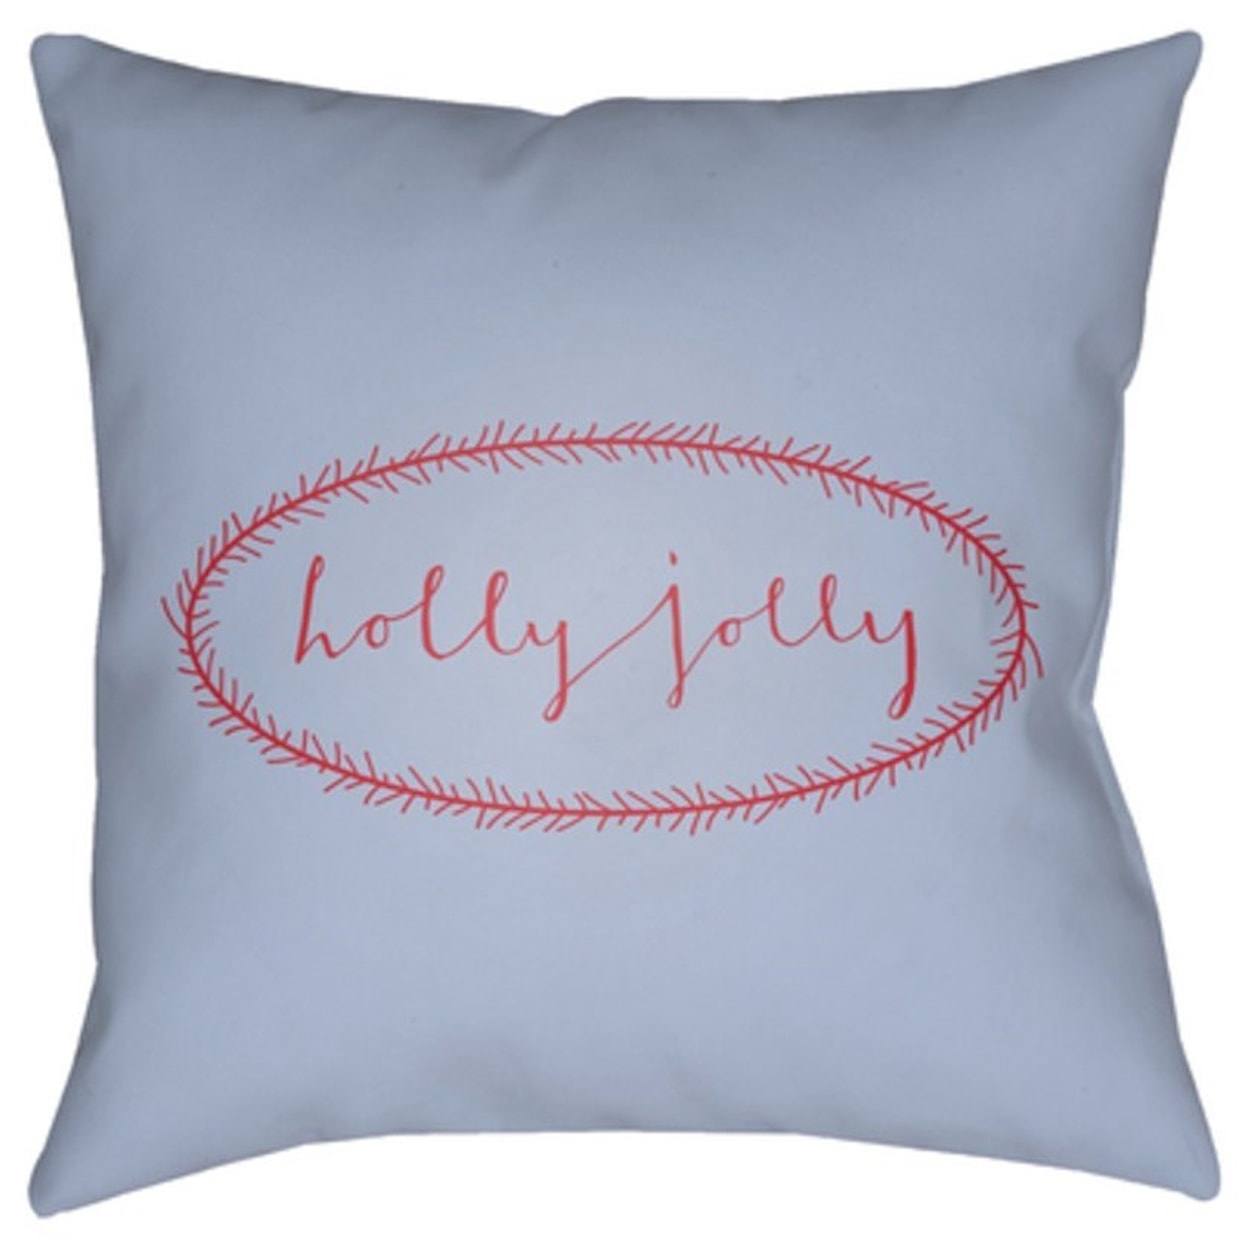 Surya Holly Jolly Pillow